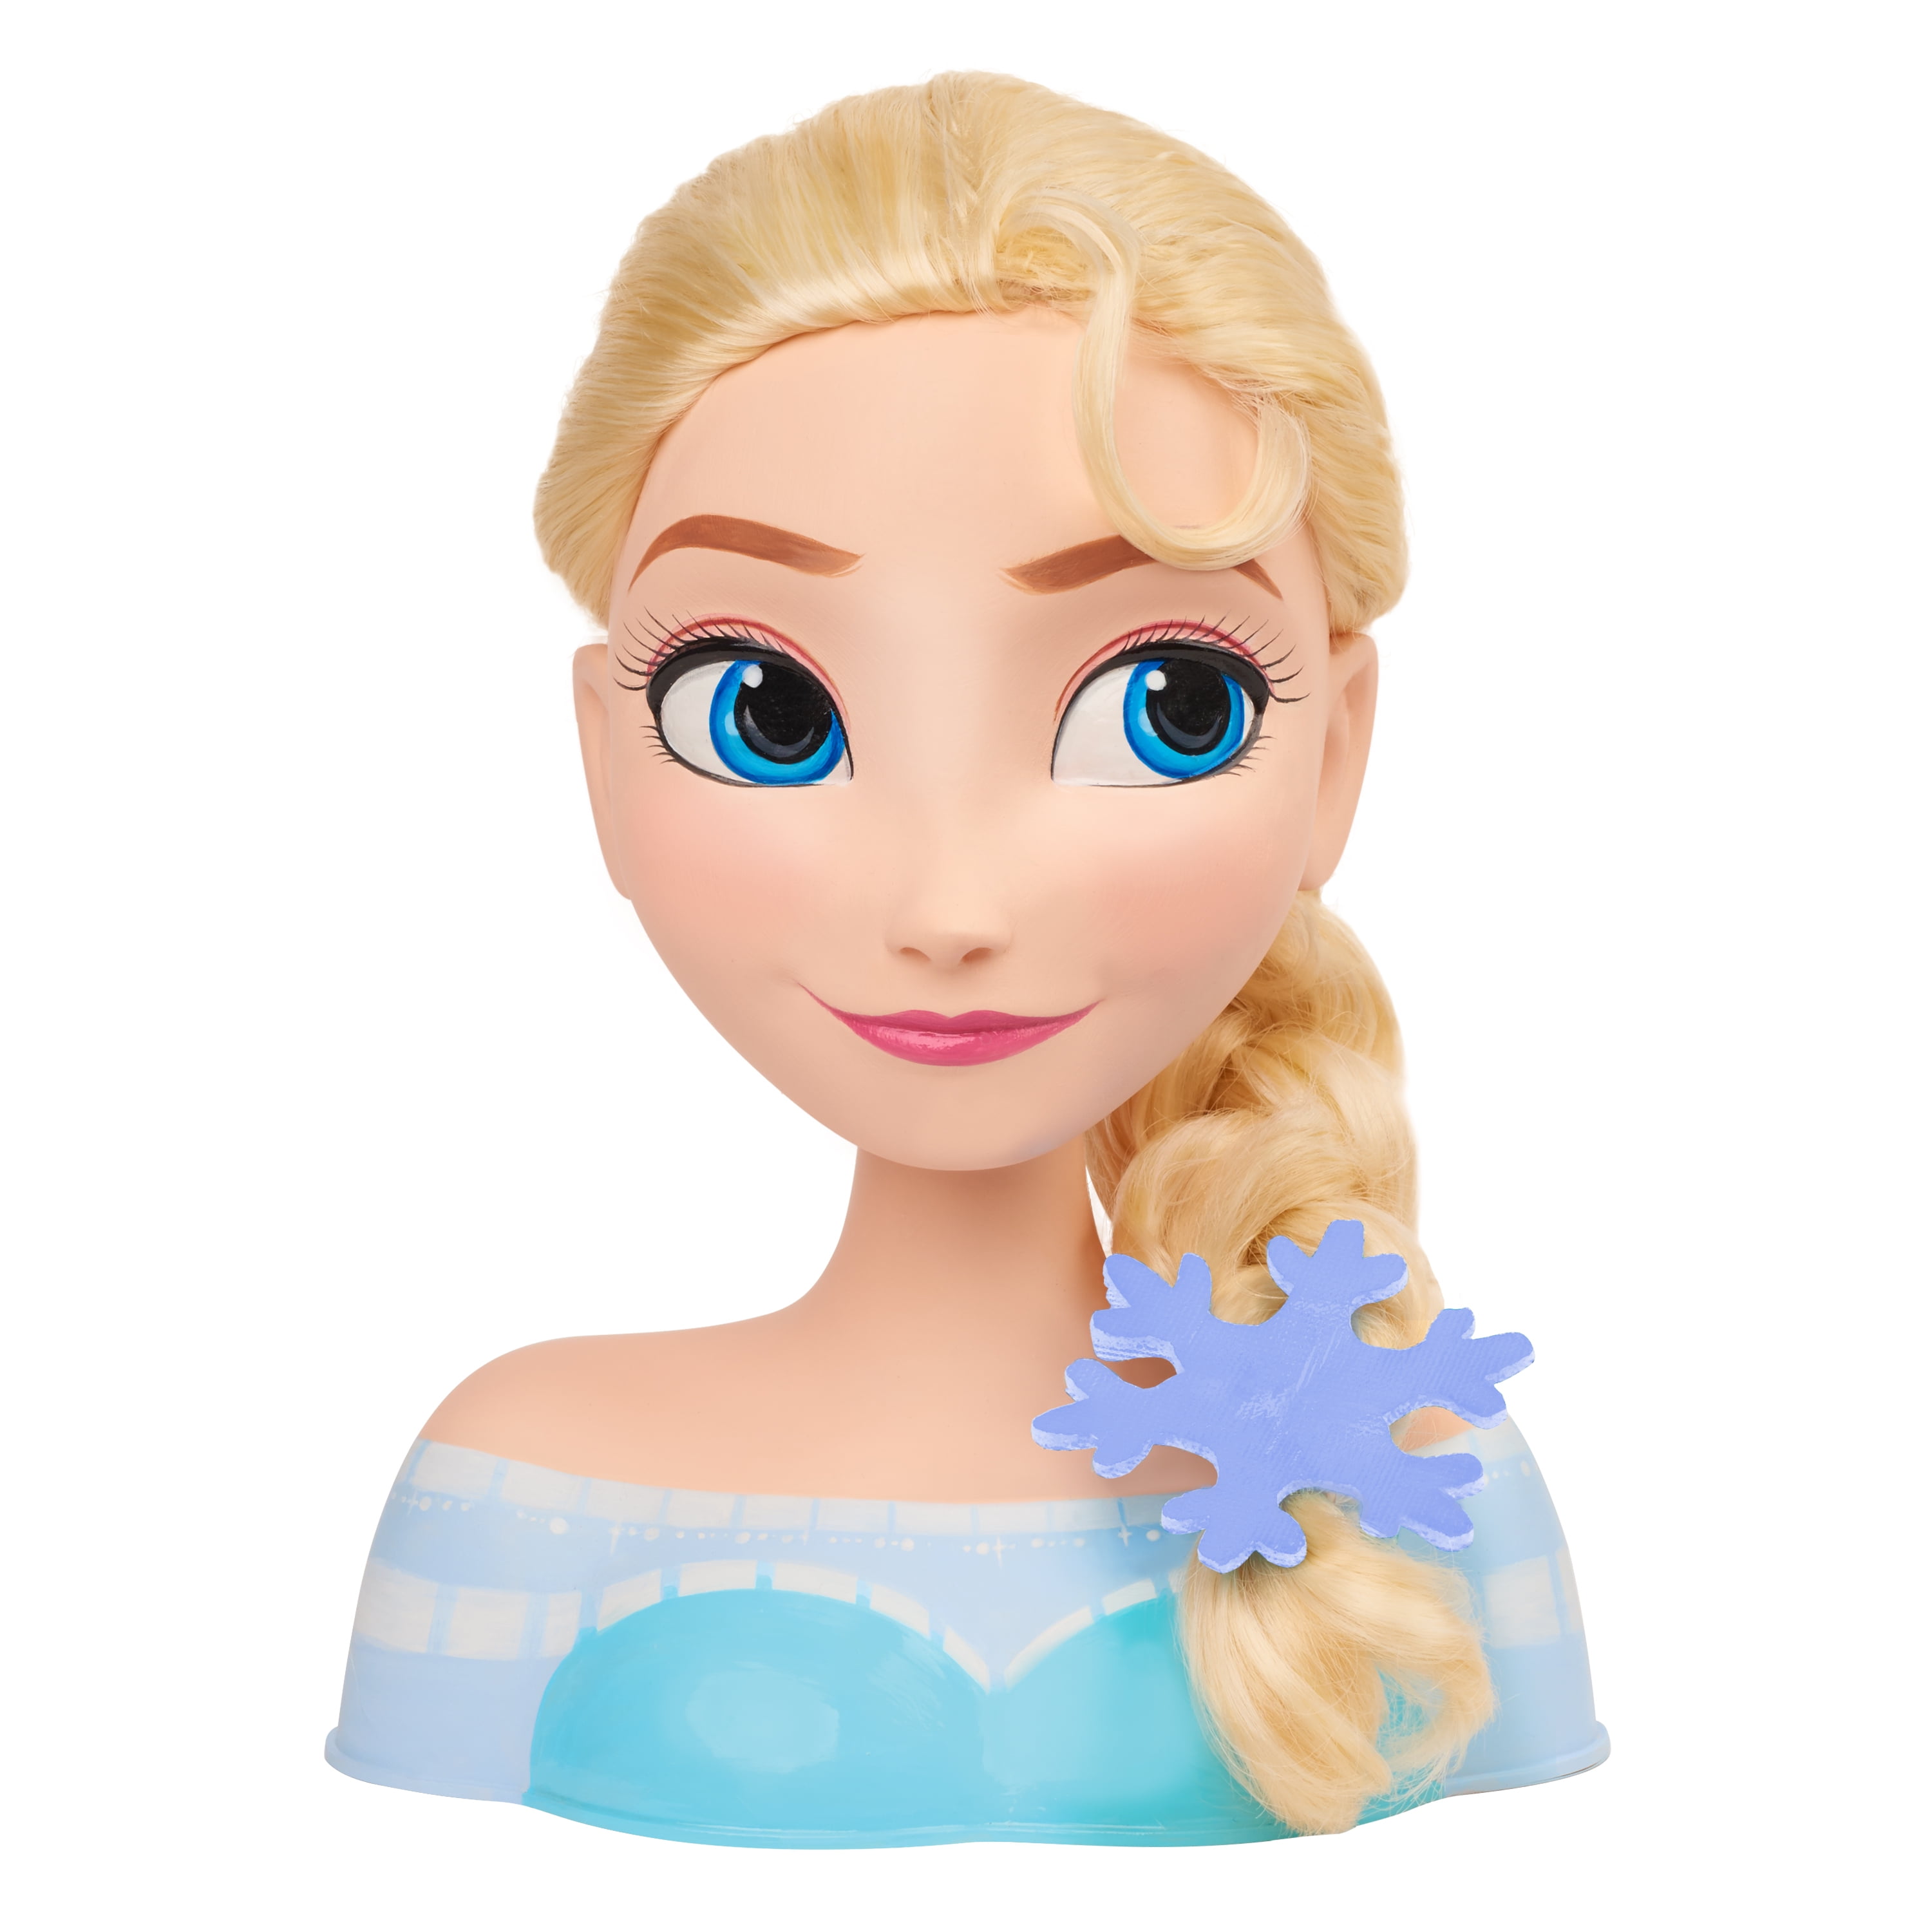 Frozen 2 Toys | Frozen Toys - Walmart.com